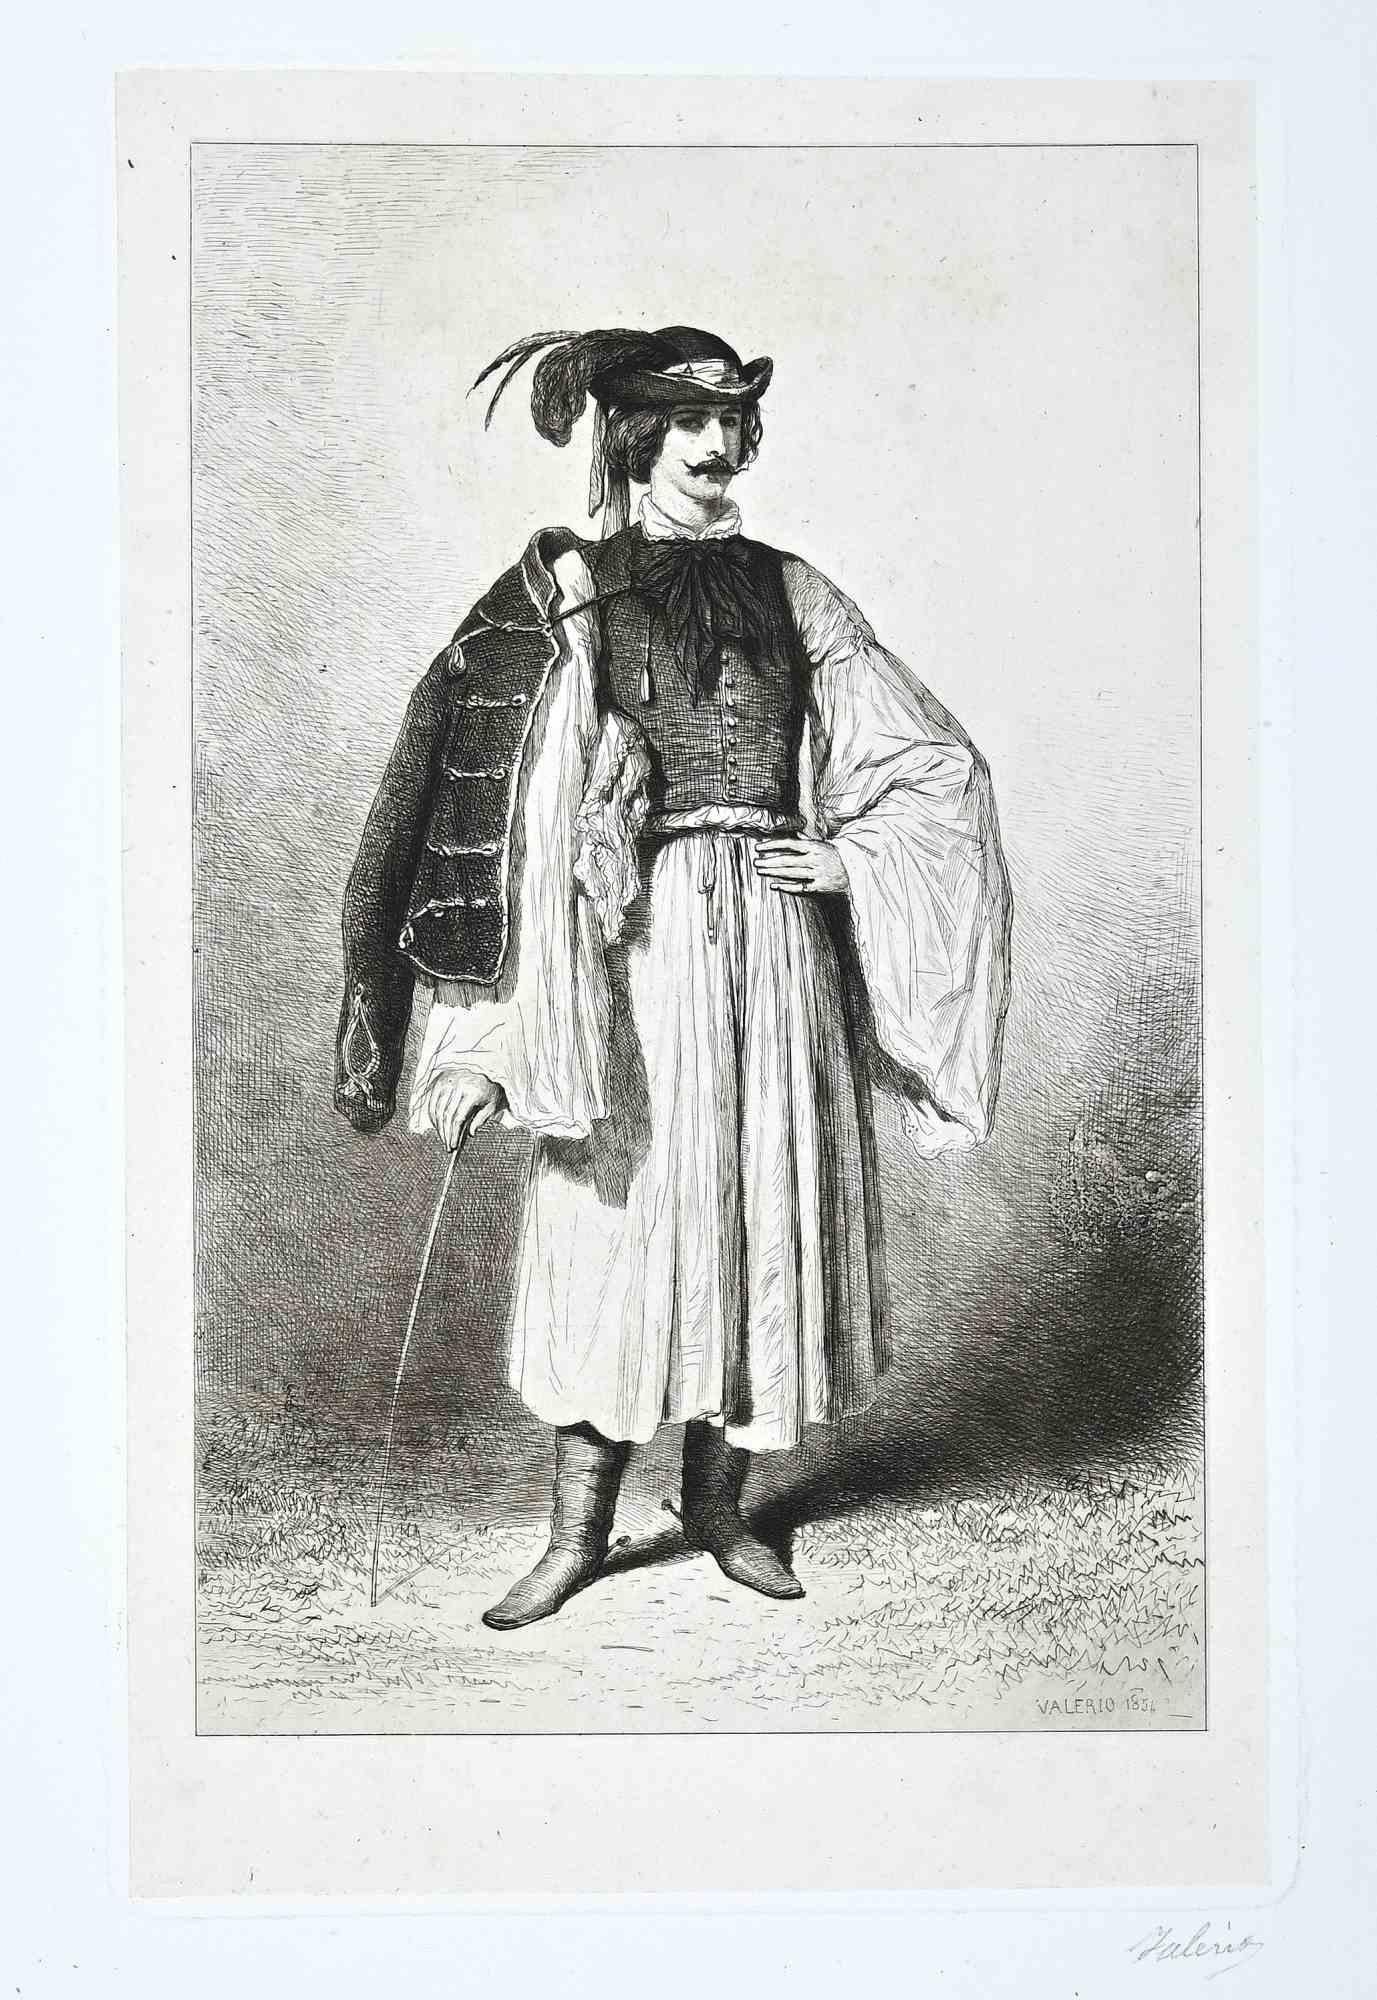 Serbian Musician - Original Etching by Théodore Valério - 1854